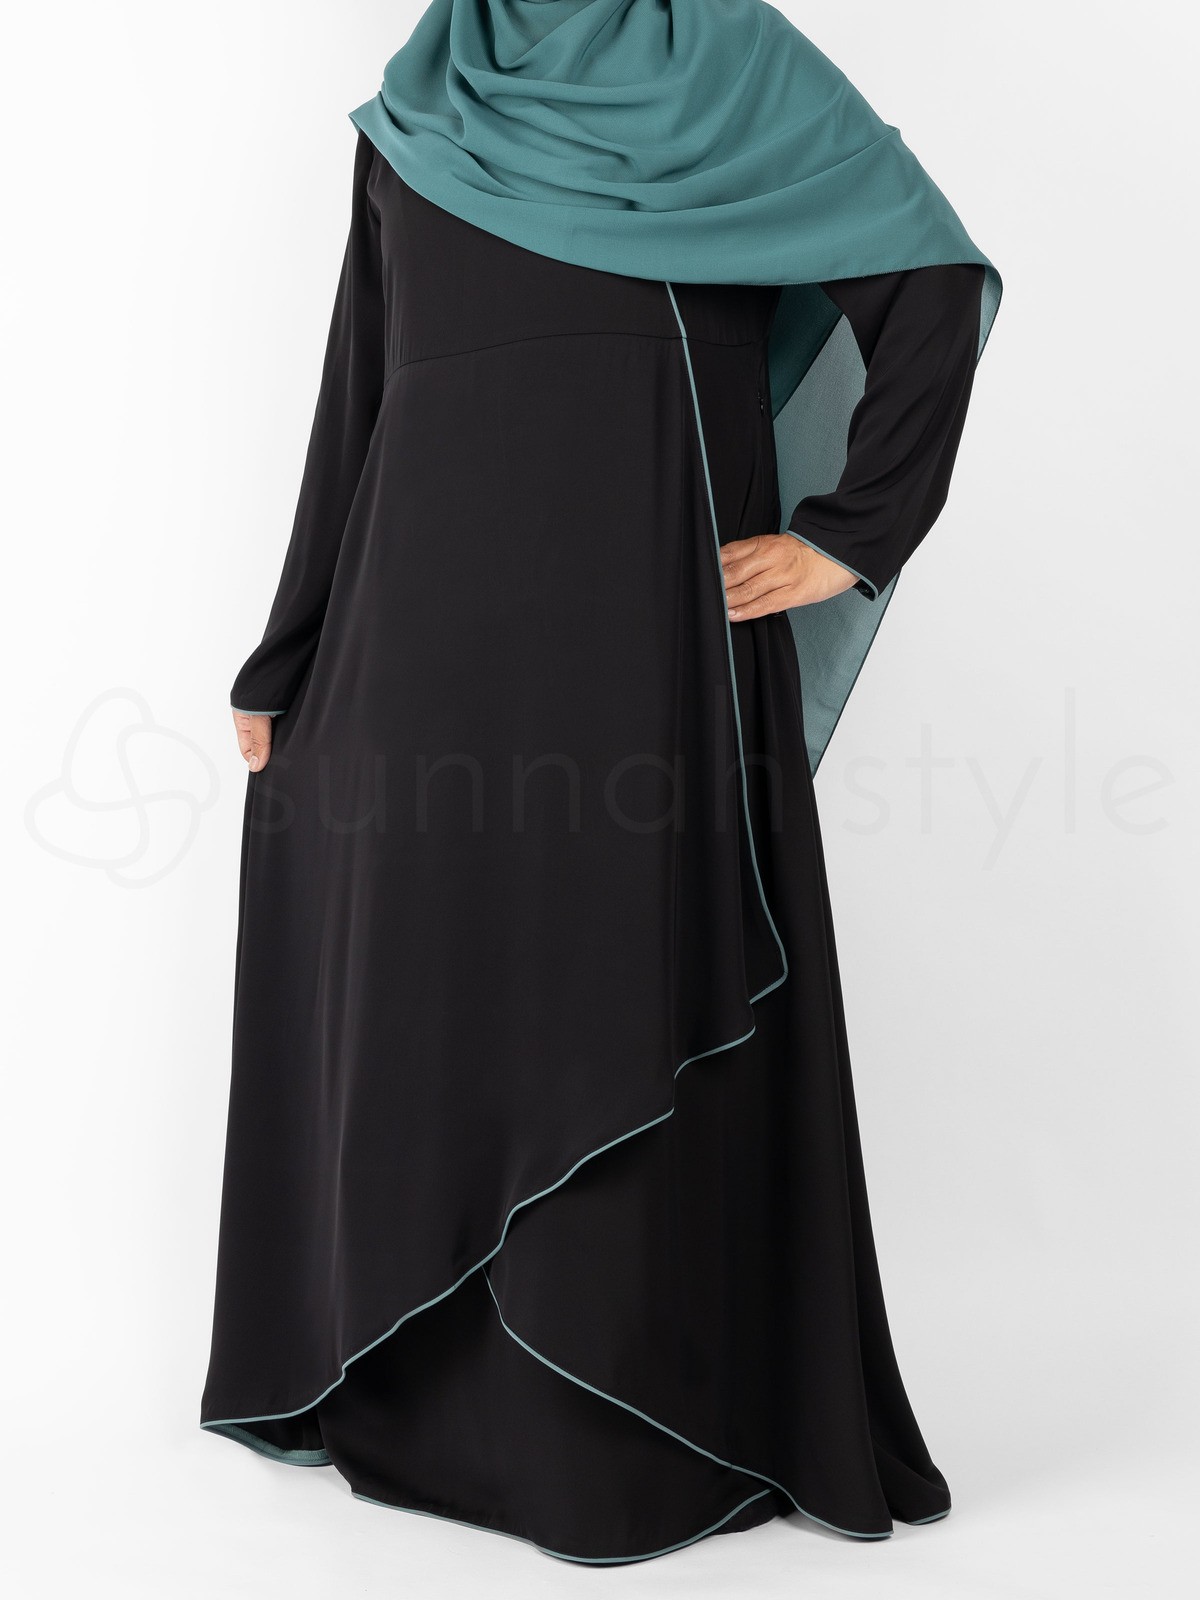 Sunnah Style - Anemone Layered Abaya (Black/Teal)